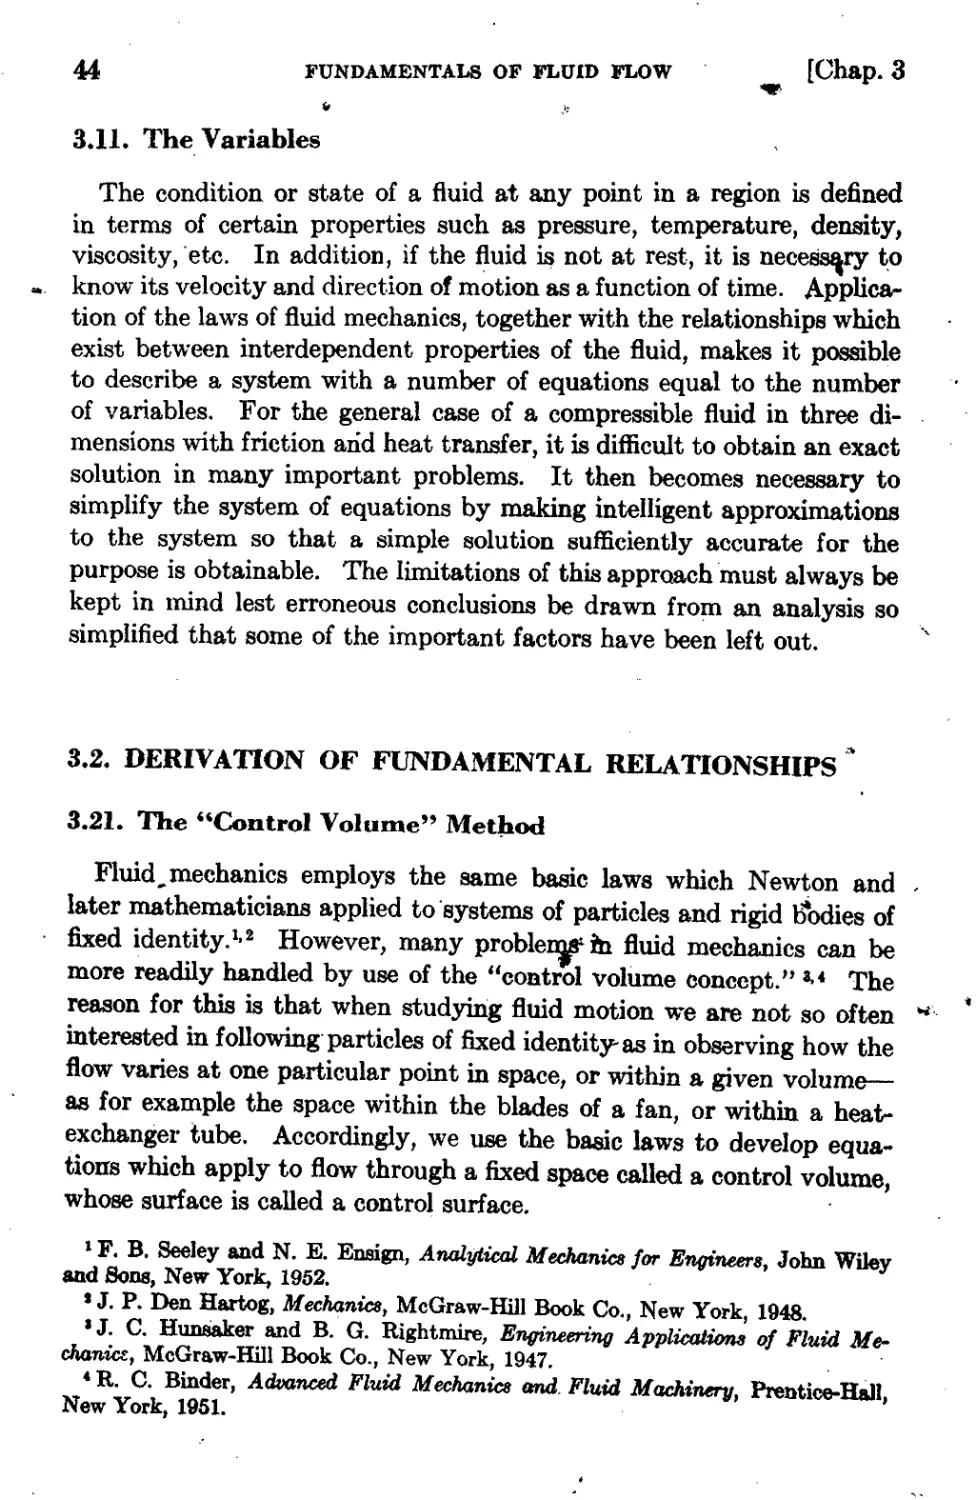 3.2 Derivation of Fundamental Relationships